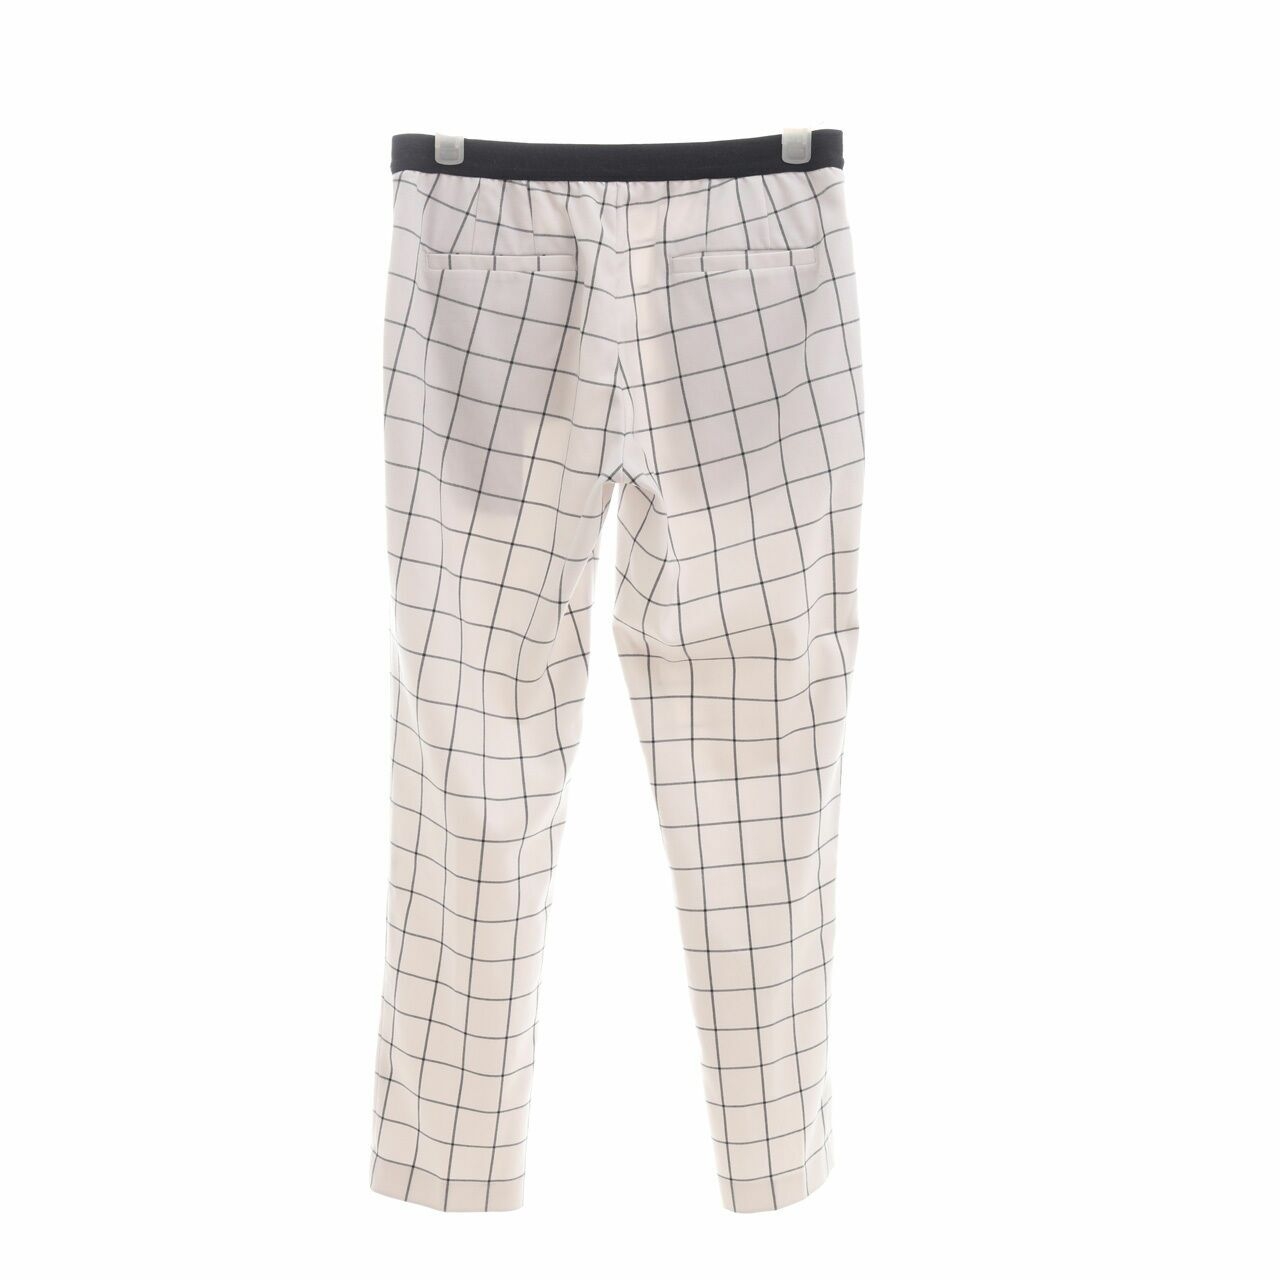 UNIQLO White & Grey Plaid Long Pants